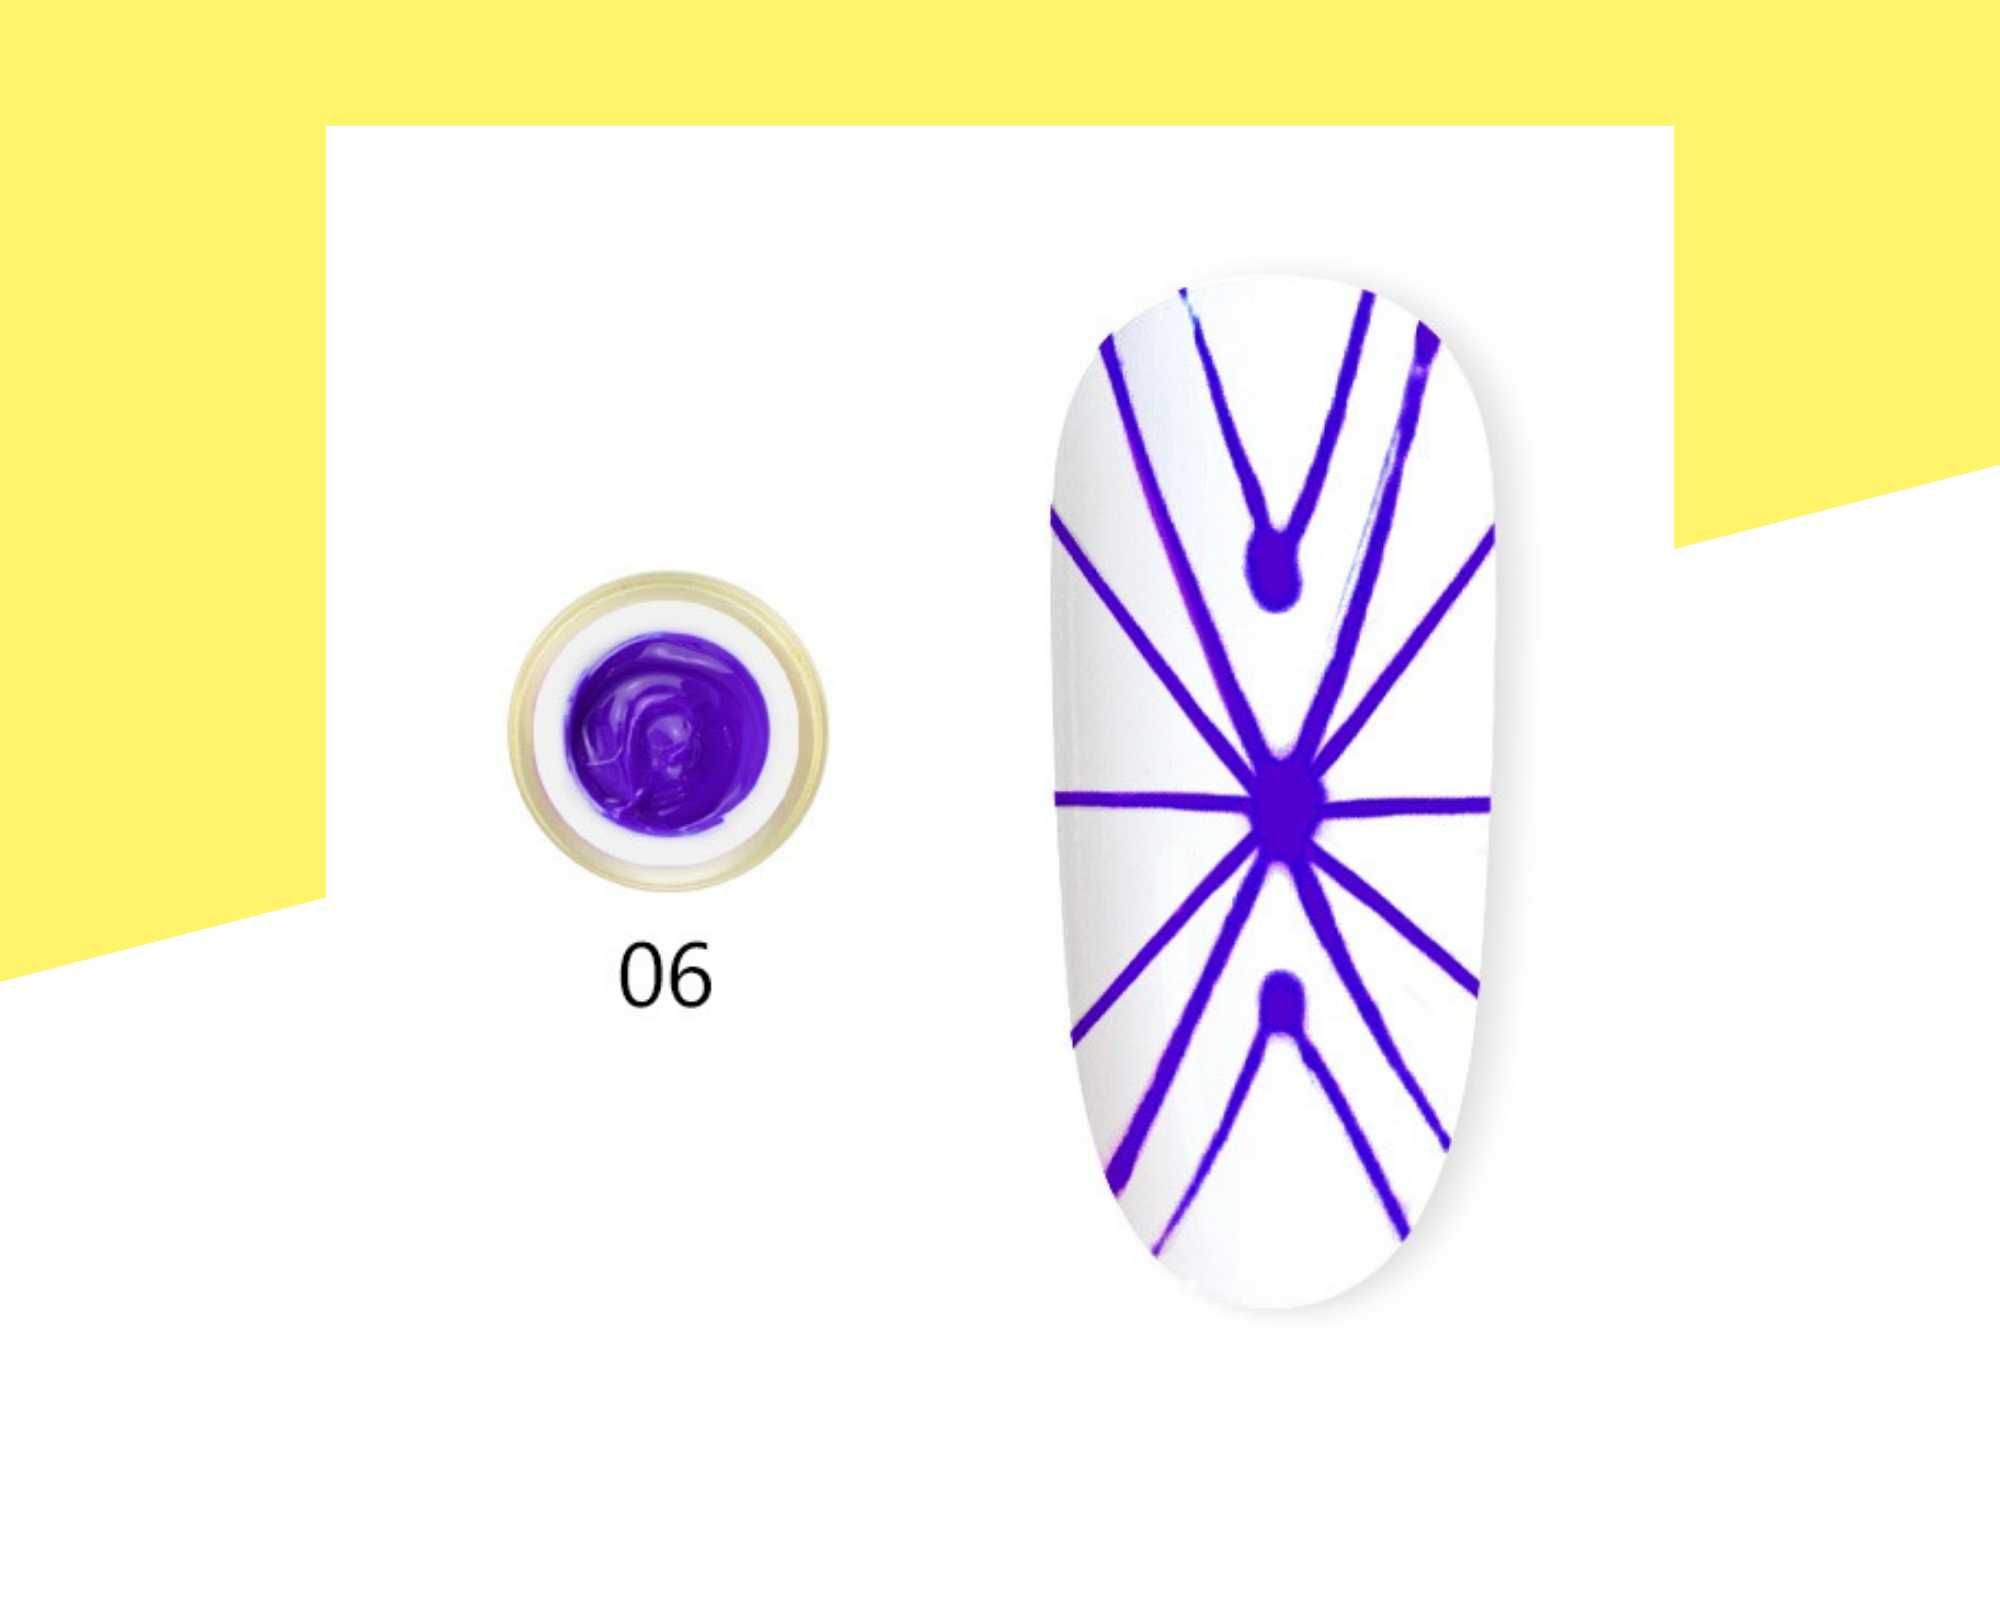 UV/LED Спайдър гел VENALISA/Spider gel